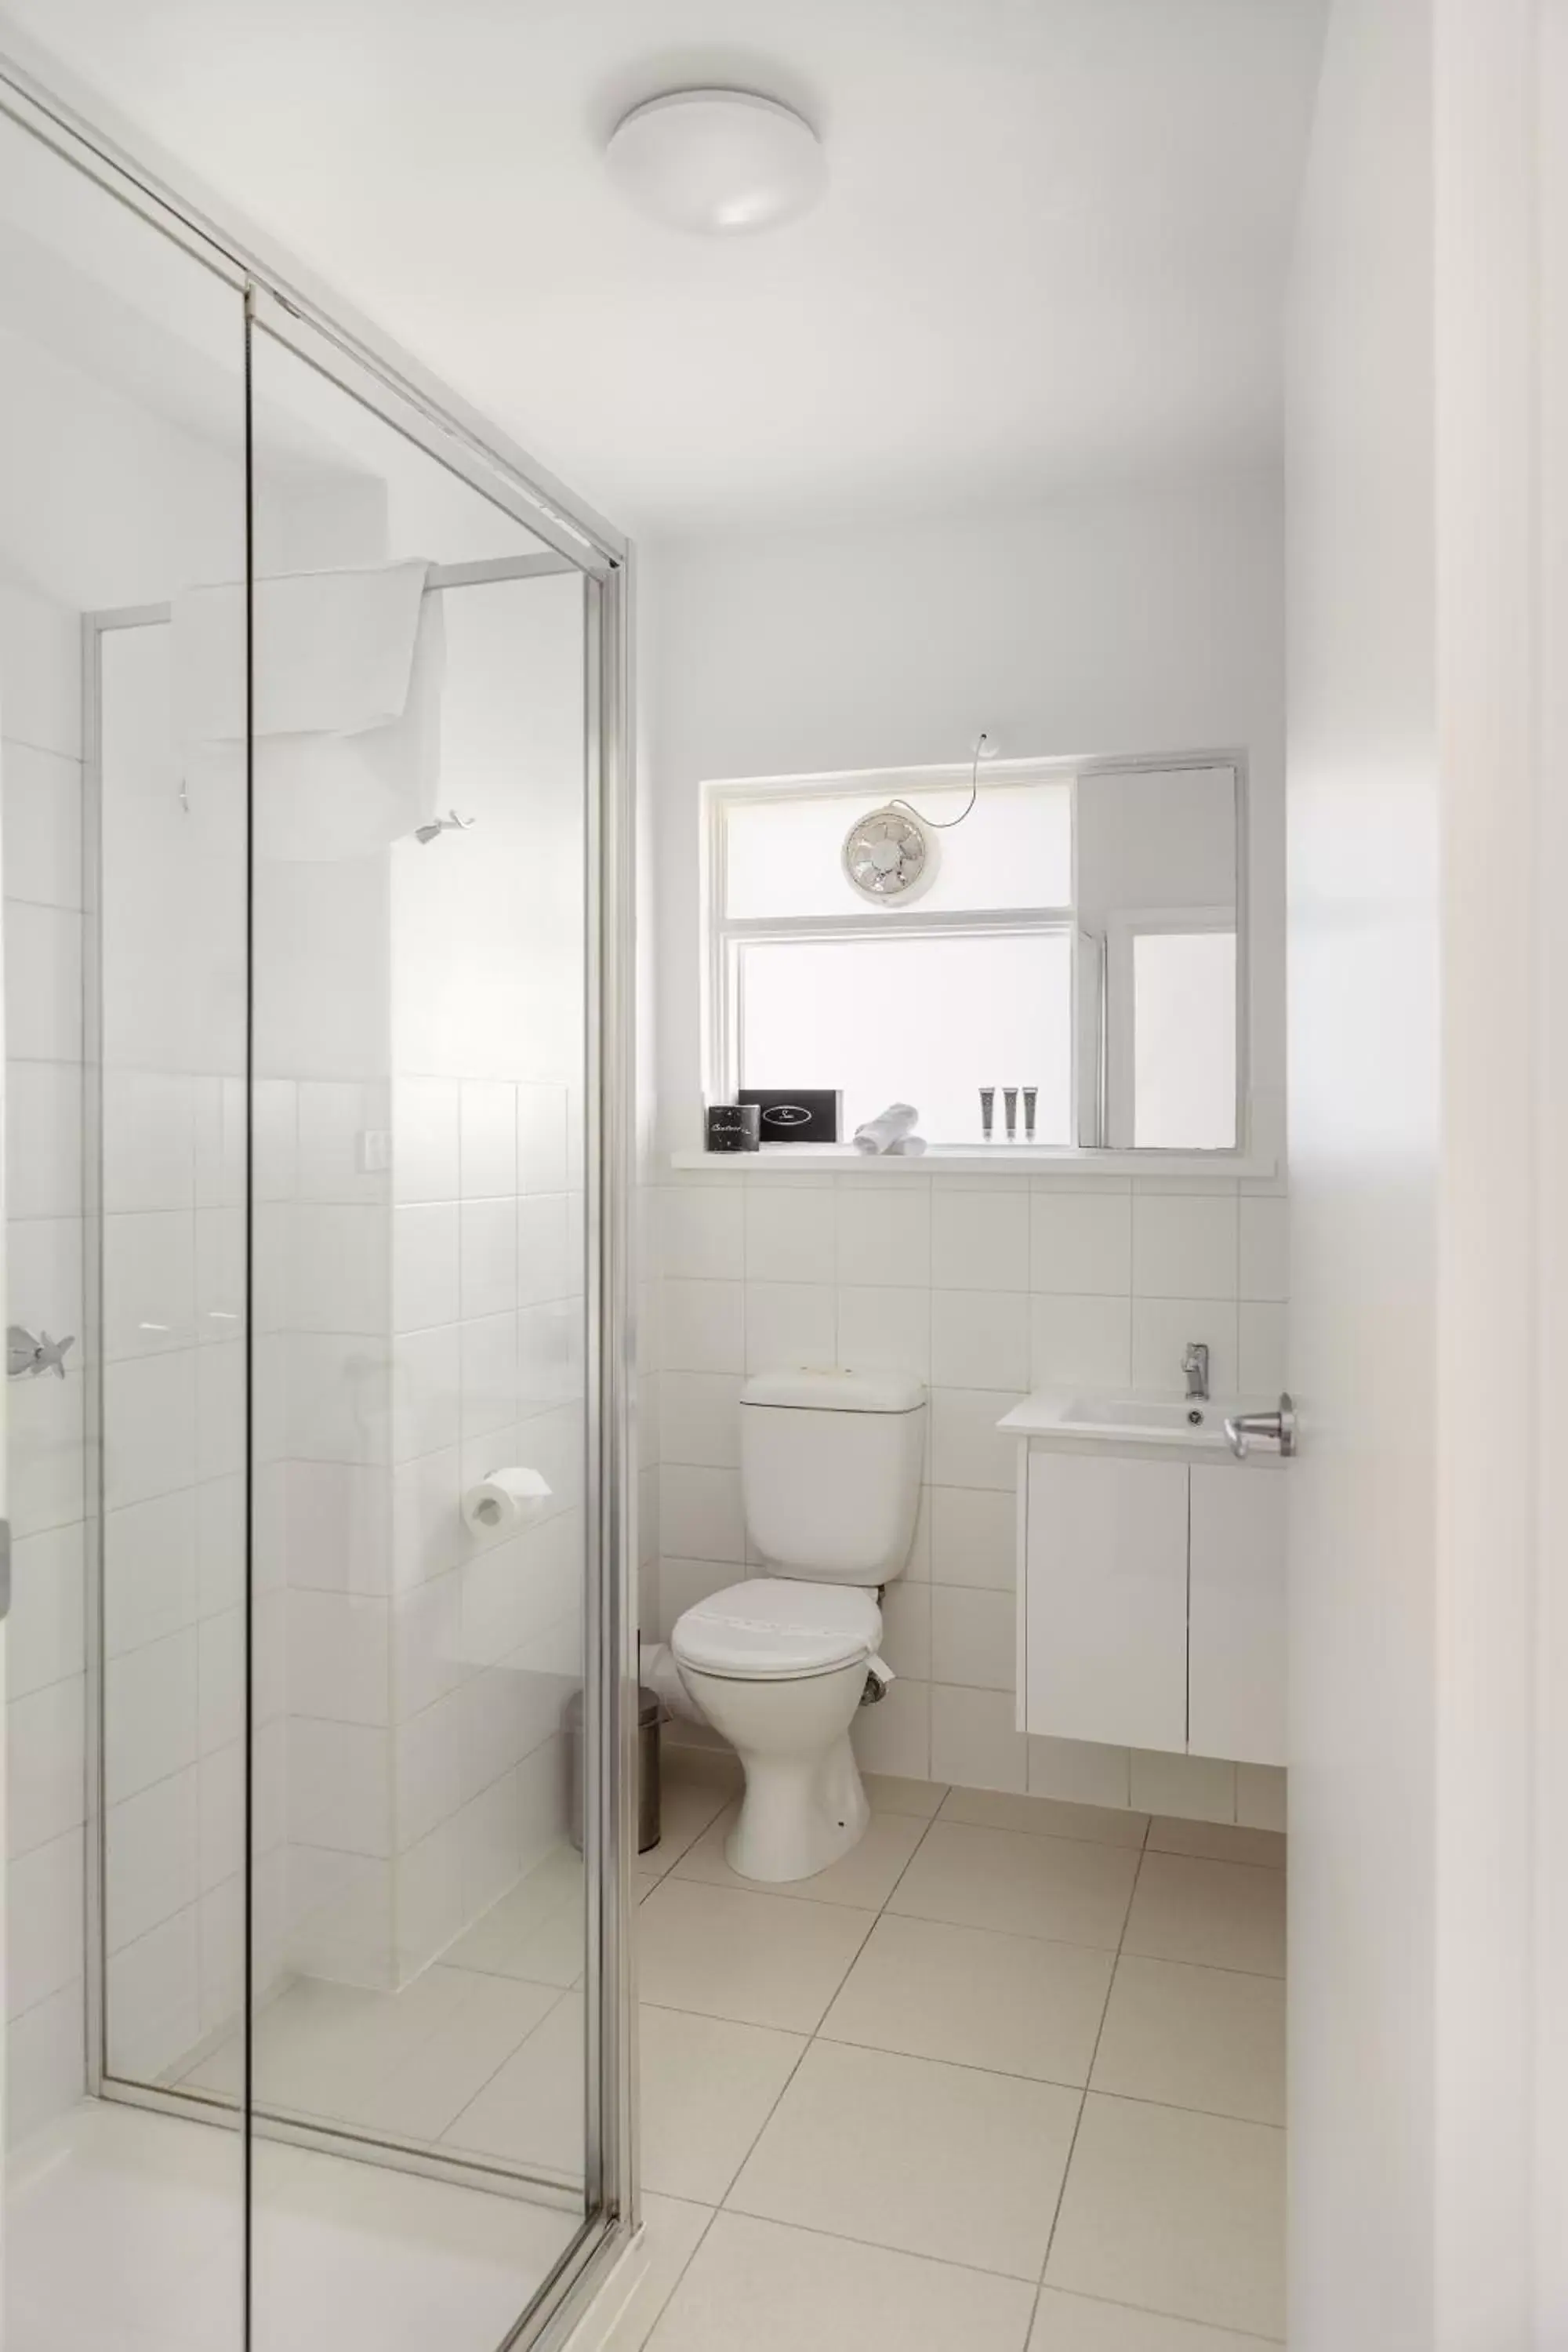 Bathroom in Apartments of South Yarra